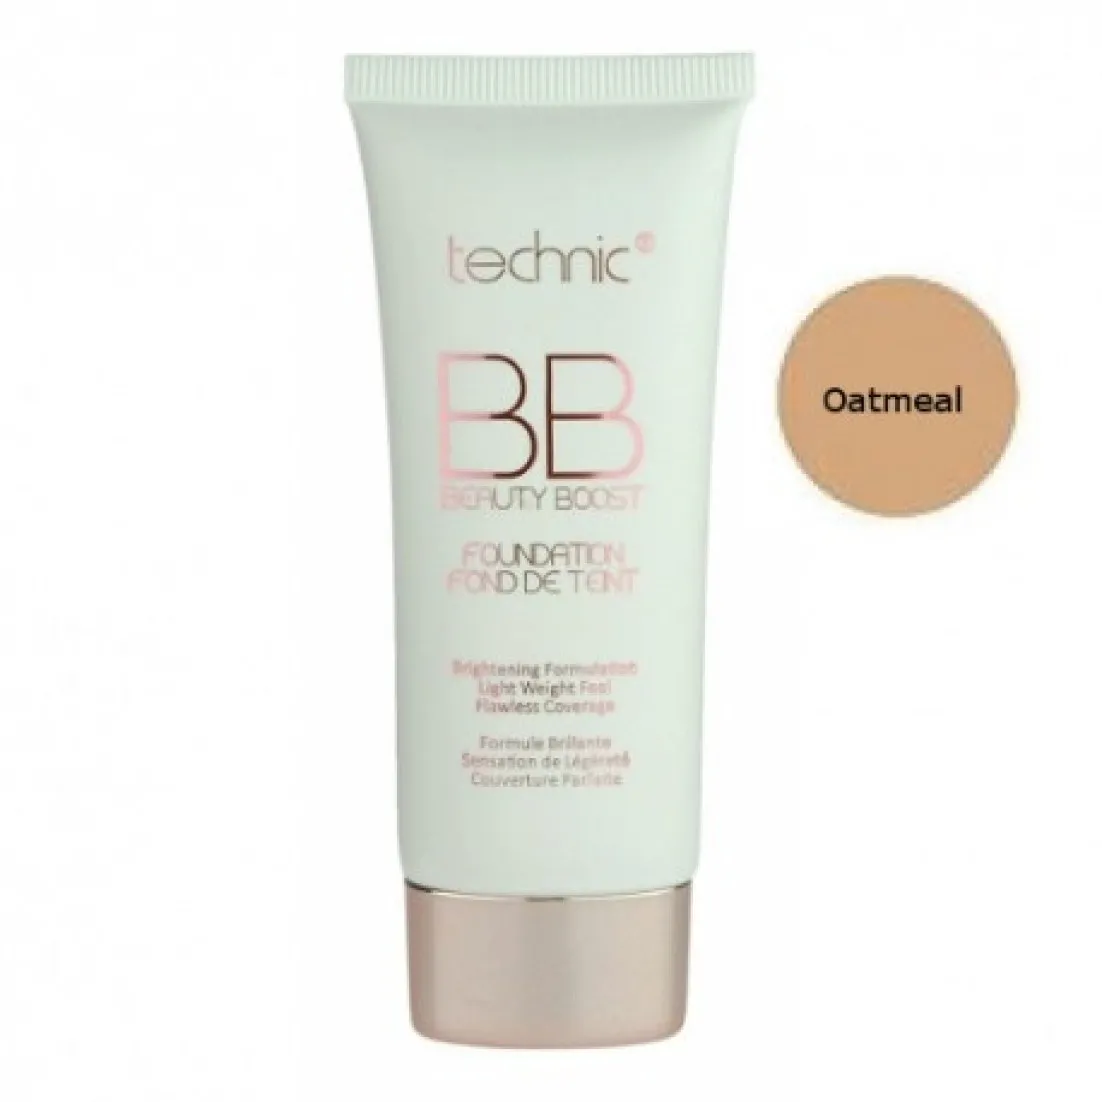 Technic BB Beauty Boost Foundation Oatmeal 30ml jpeg